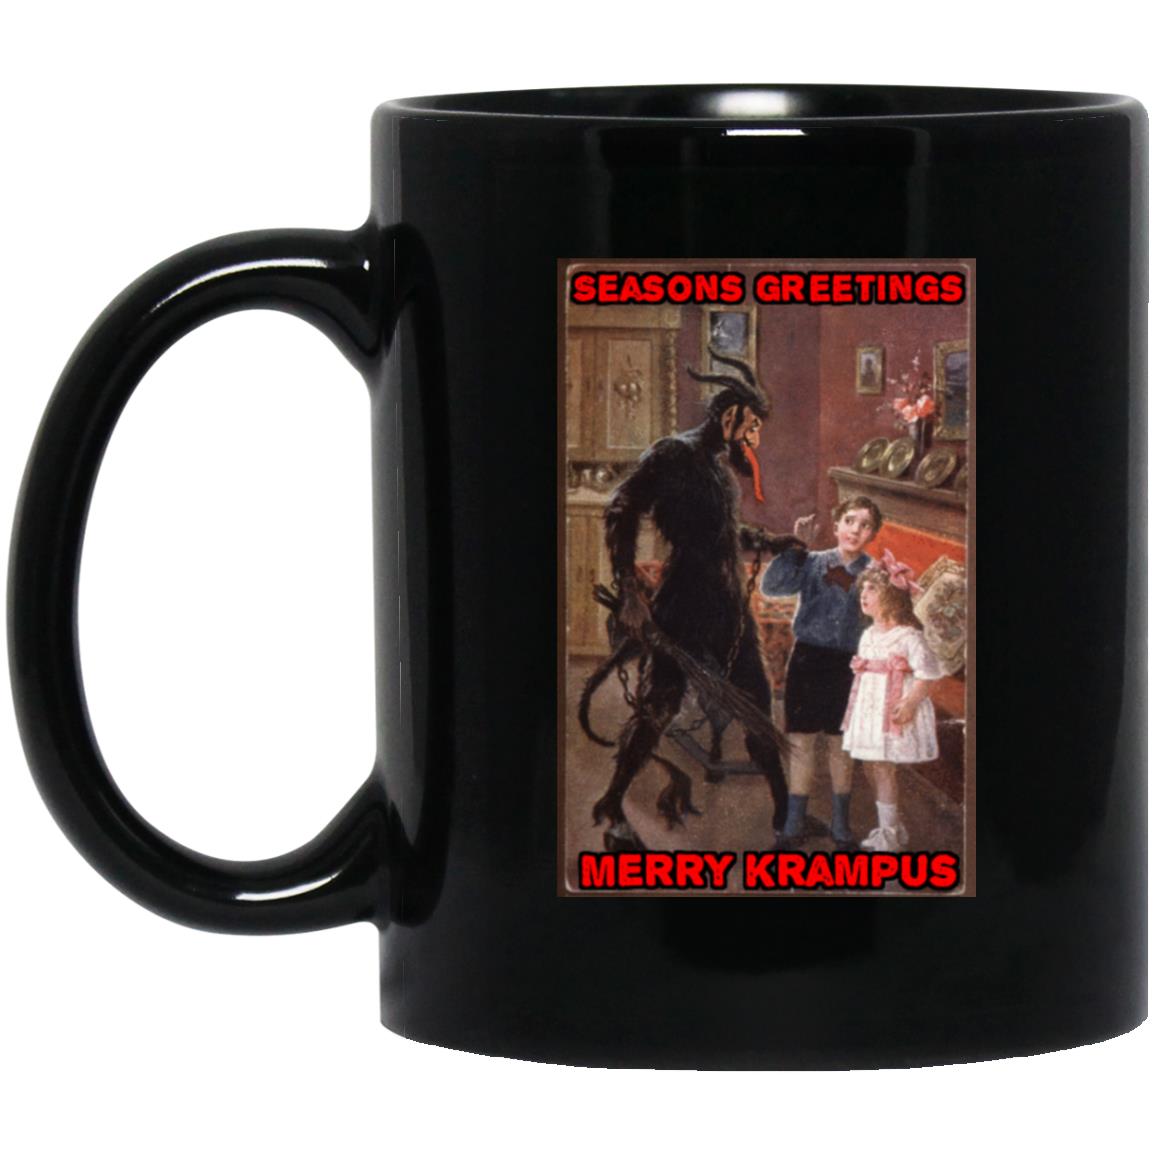 Merry Krampus Holiday Horror Seasons Greetings Coffee Mug